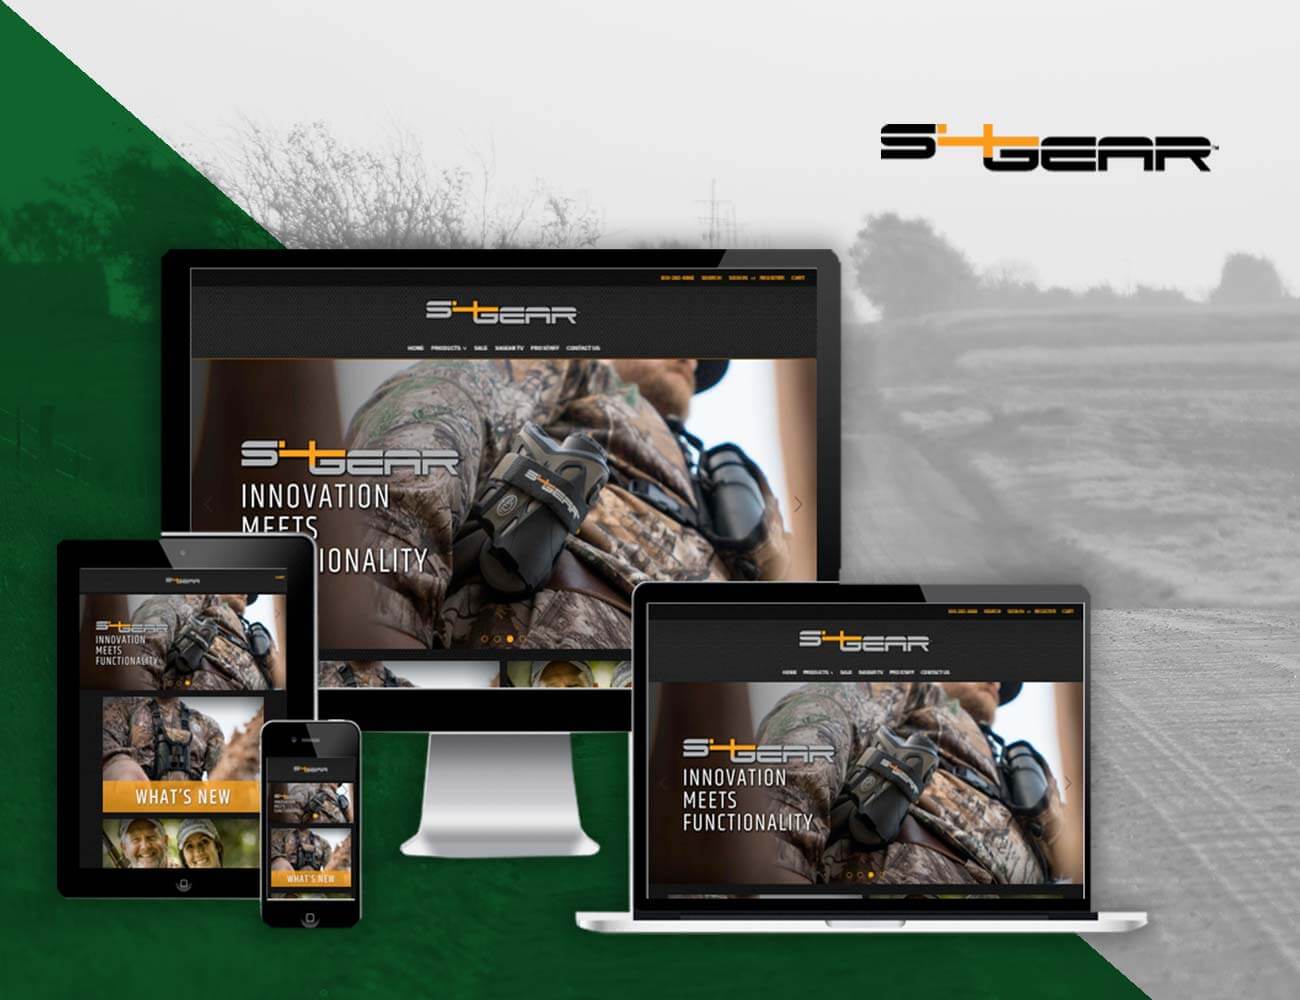 S4 Gear website design and digital marketing